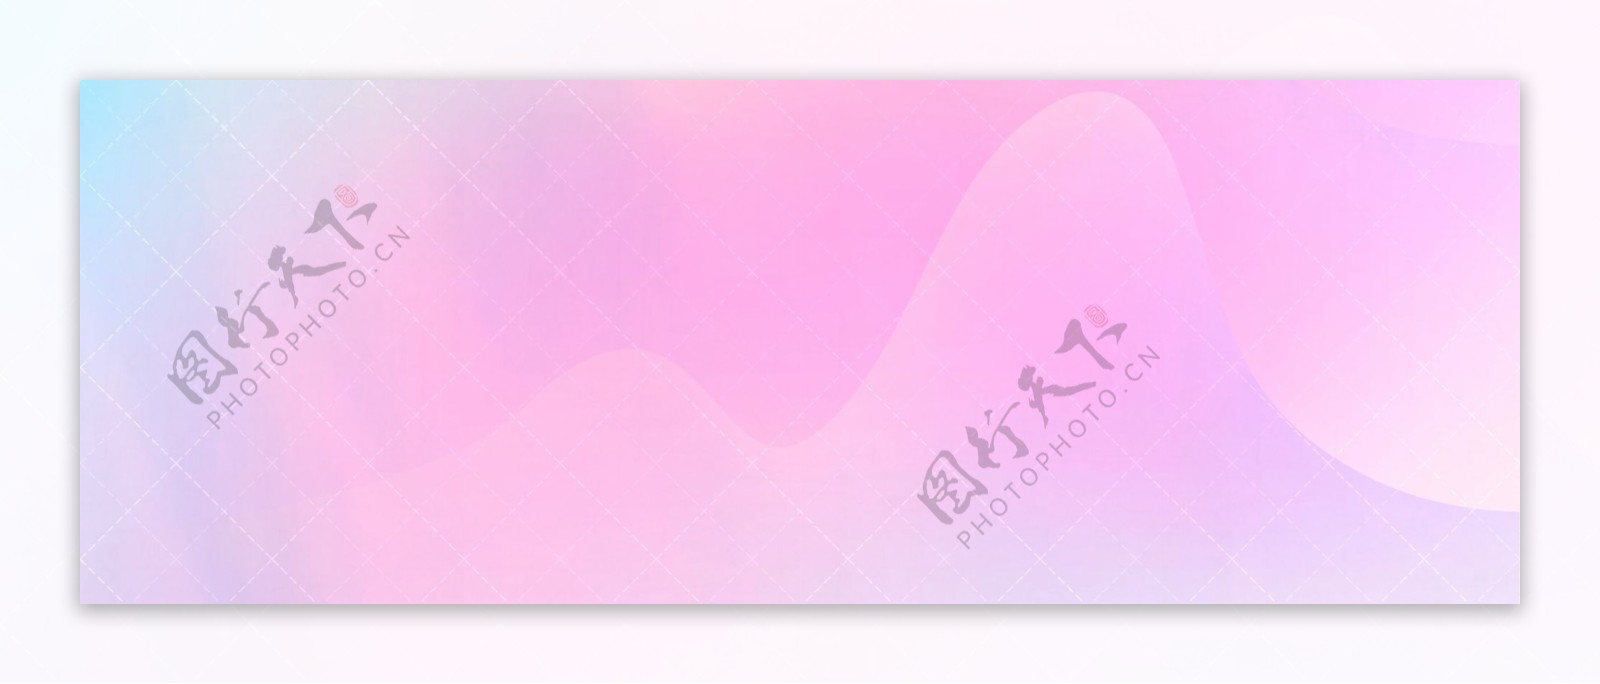 紫红浅淡风格banner